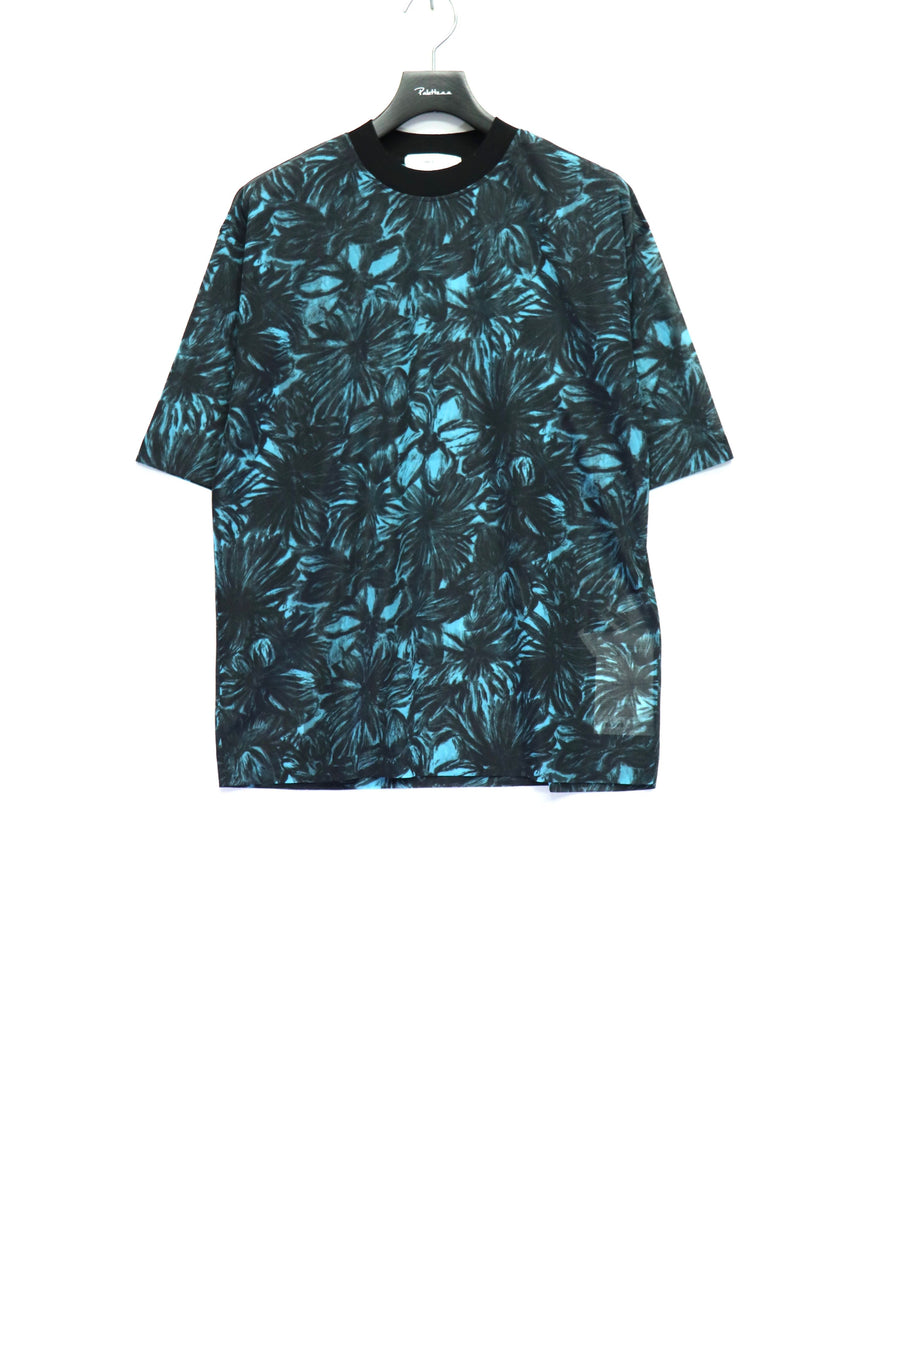 Toga Virilis's Sheer Jersey Print T-Shirt Blue mail order